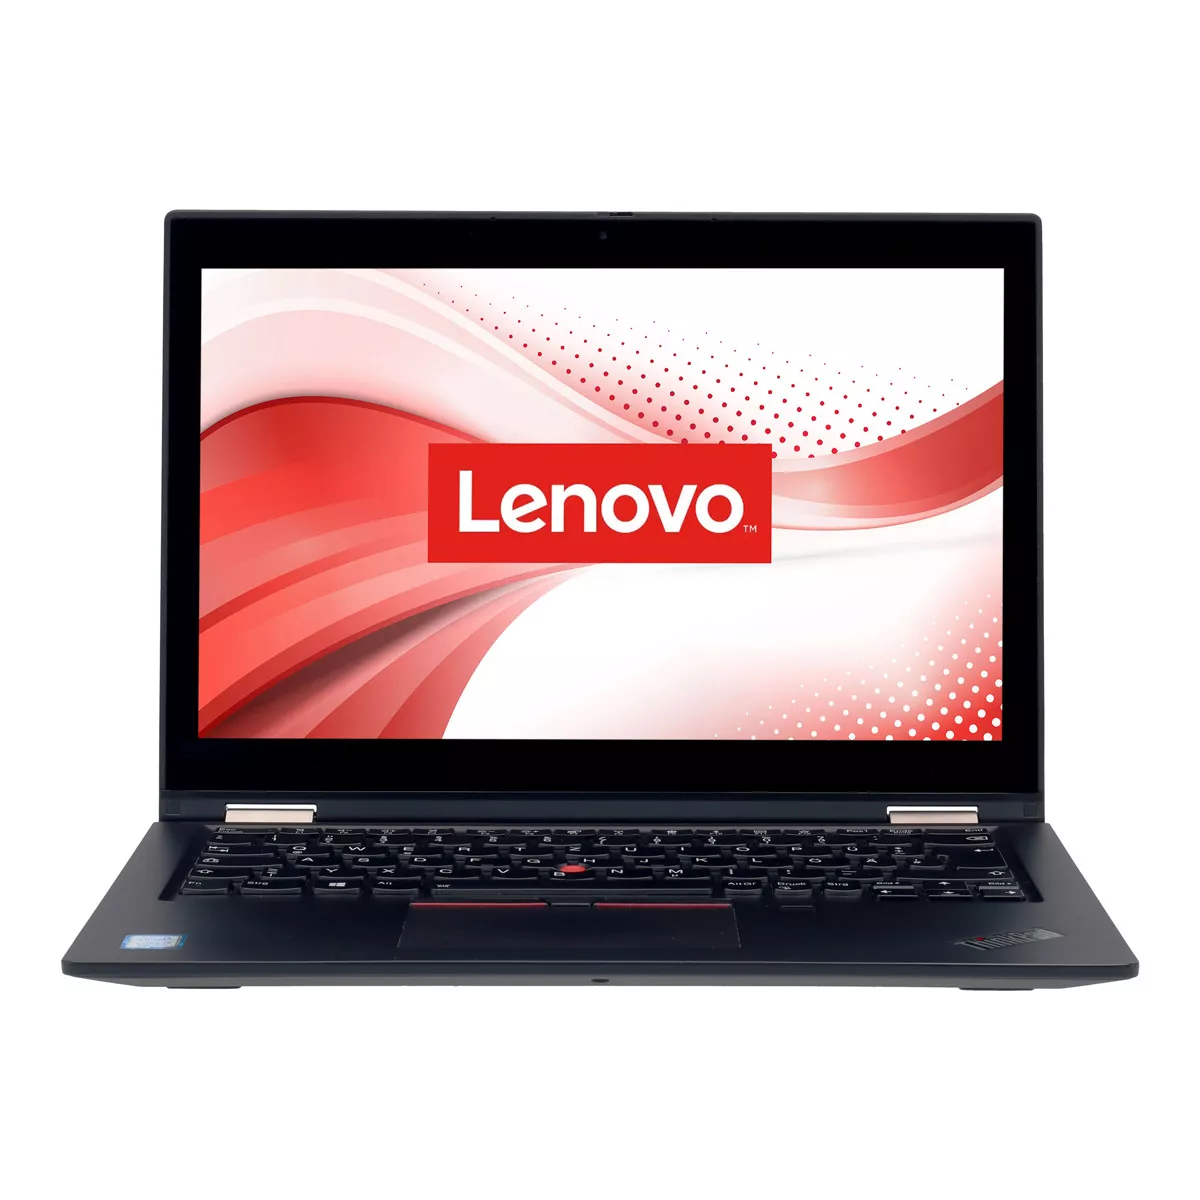 Lenovo ThinkPad X13 Yoga G1 Core i5 10310U Touch 8 GB 240 GB M.2 nVME SSD Webcam A+